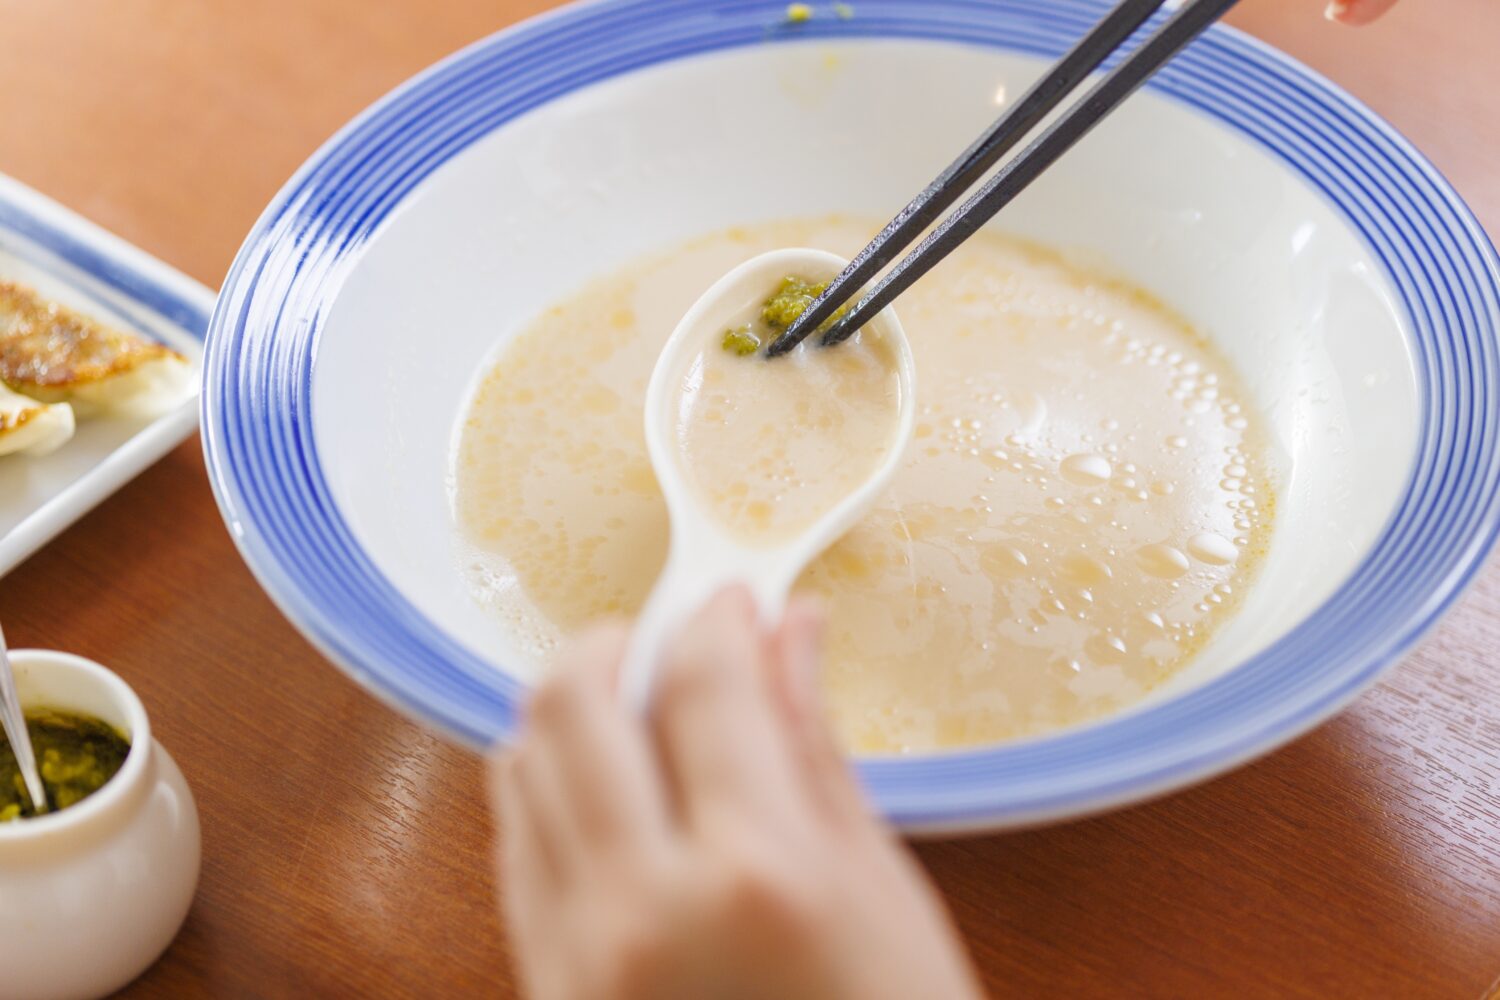 Finish off with gyoza (dumpling) soup.